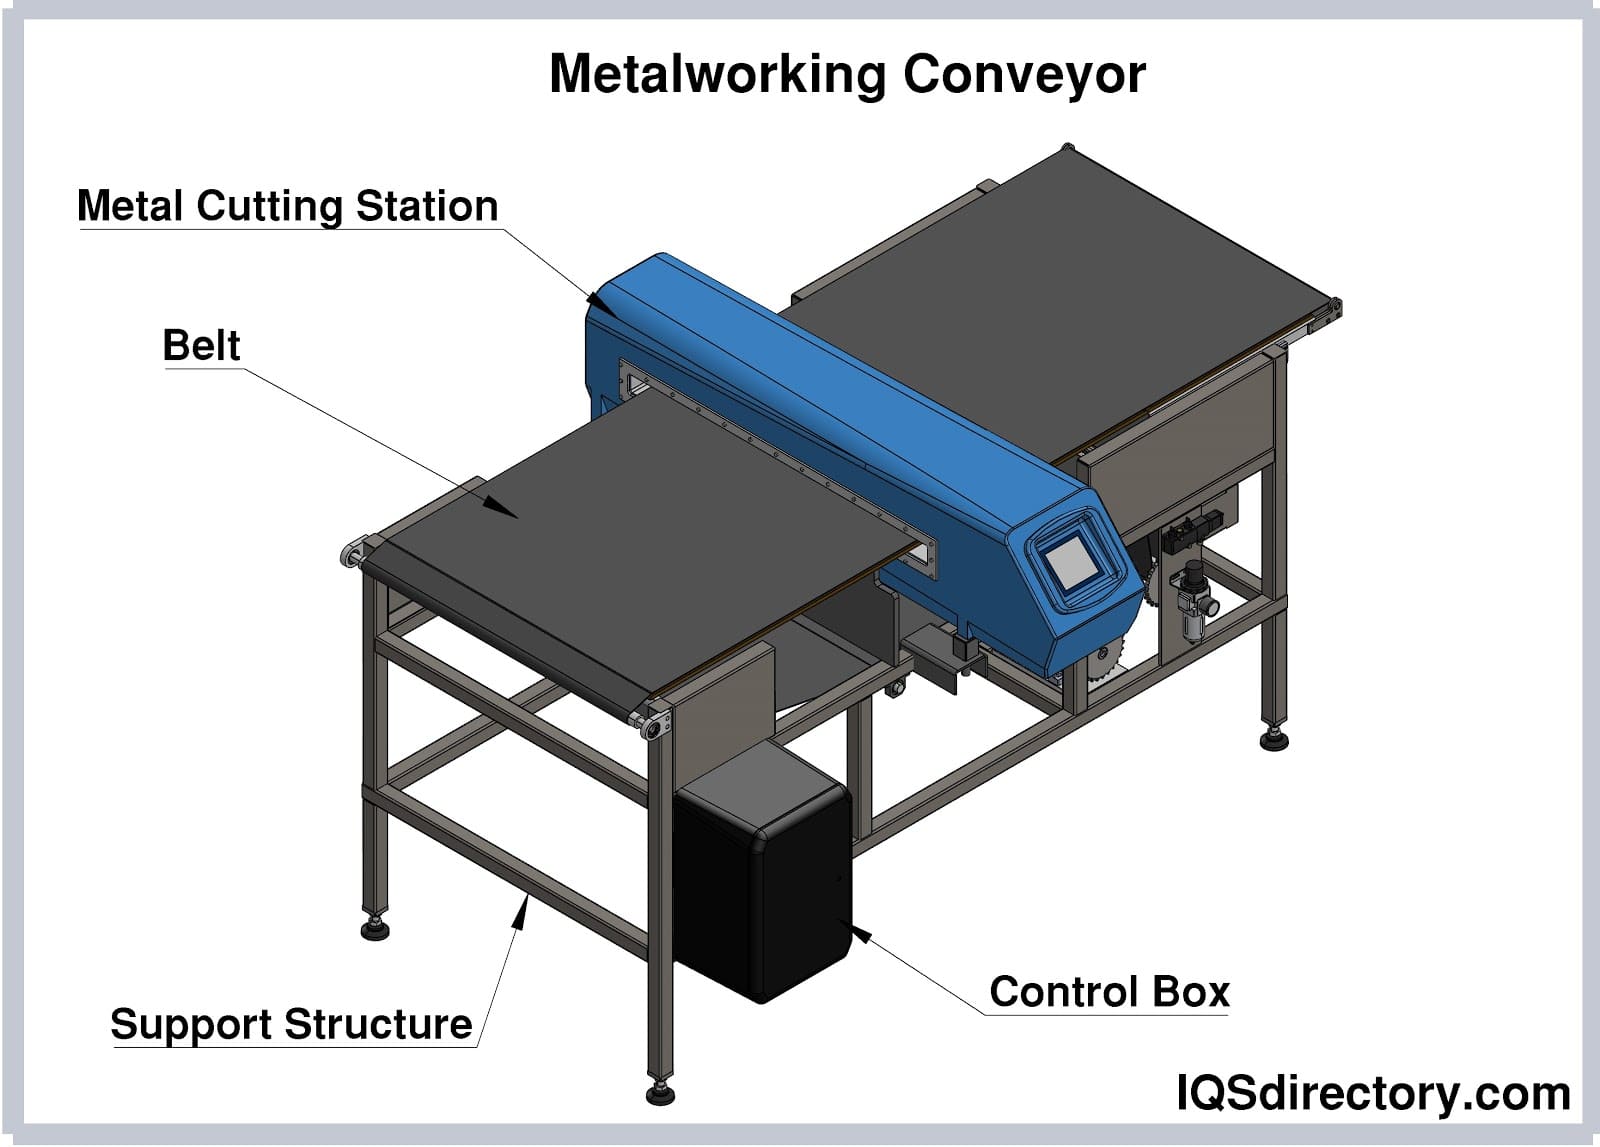 Metalworking Conveyor